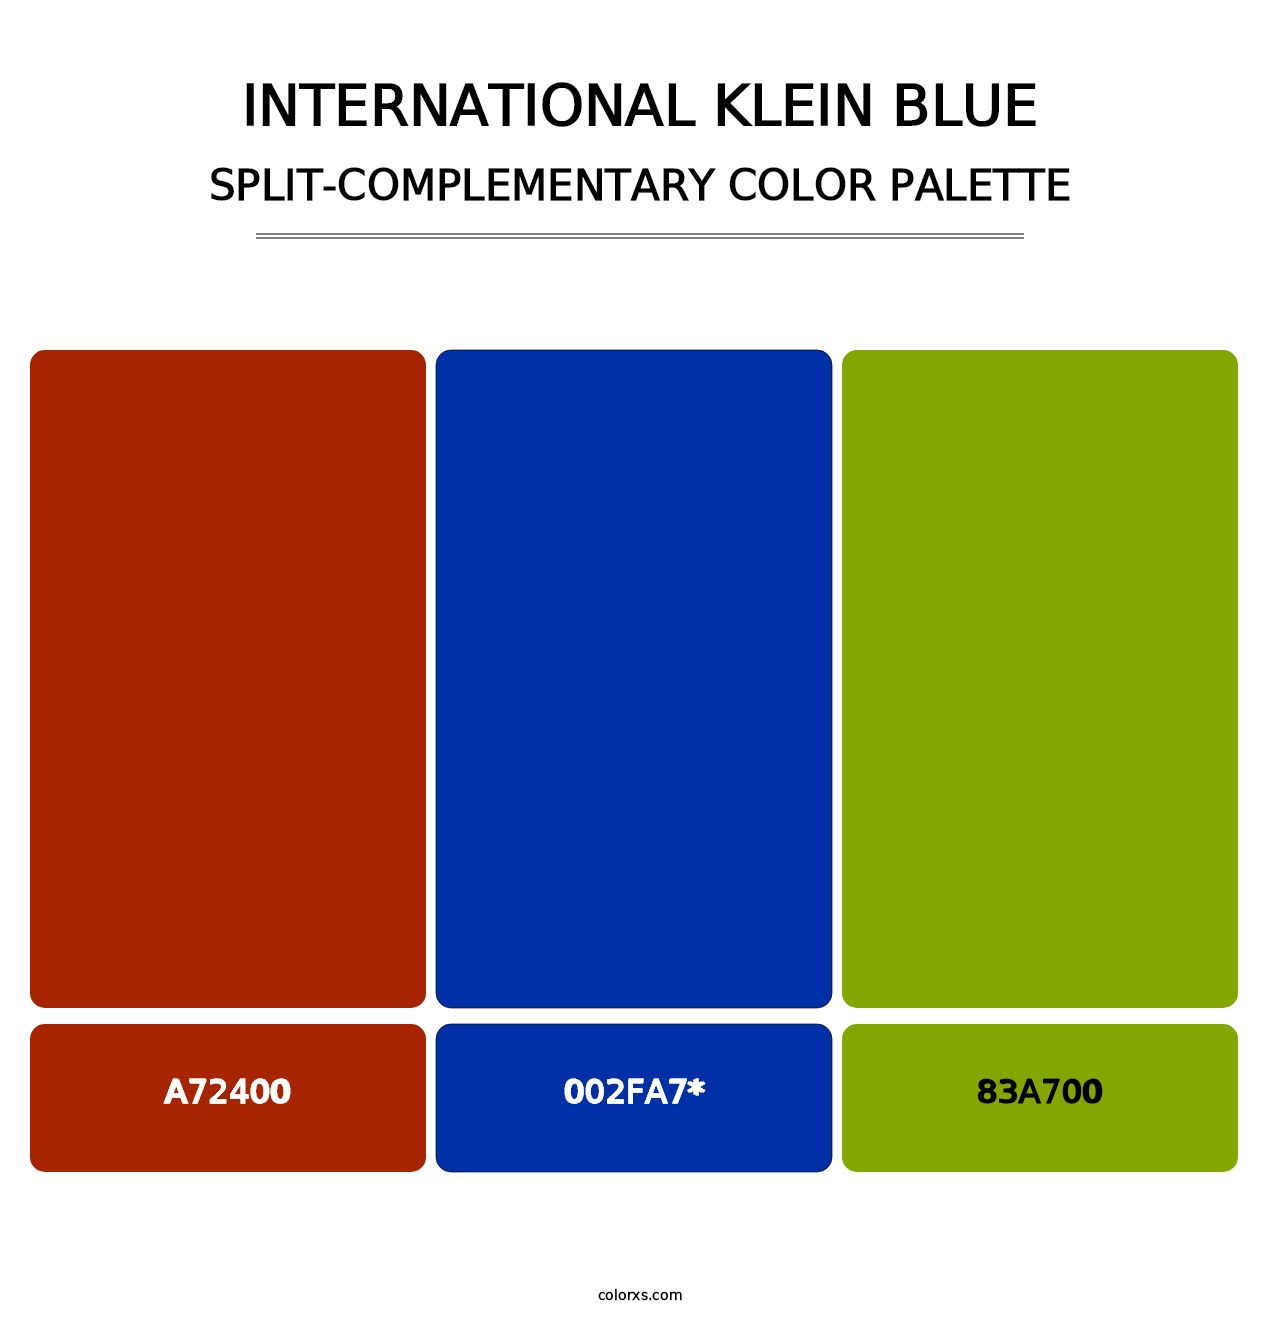 International Klein Blue - Split-Complementary Color Palette